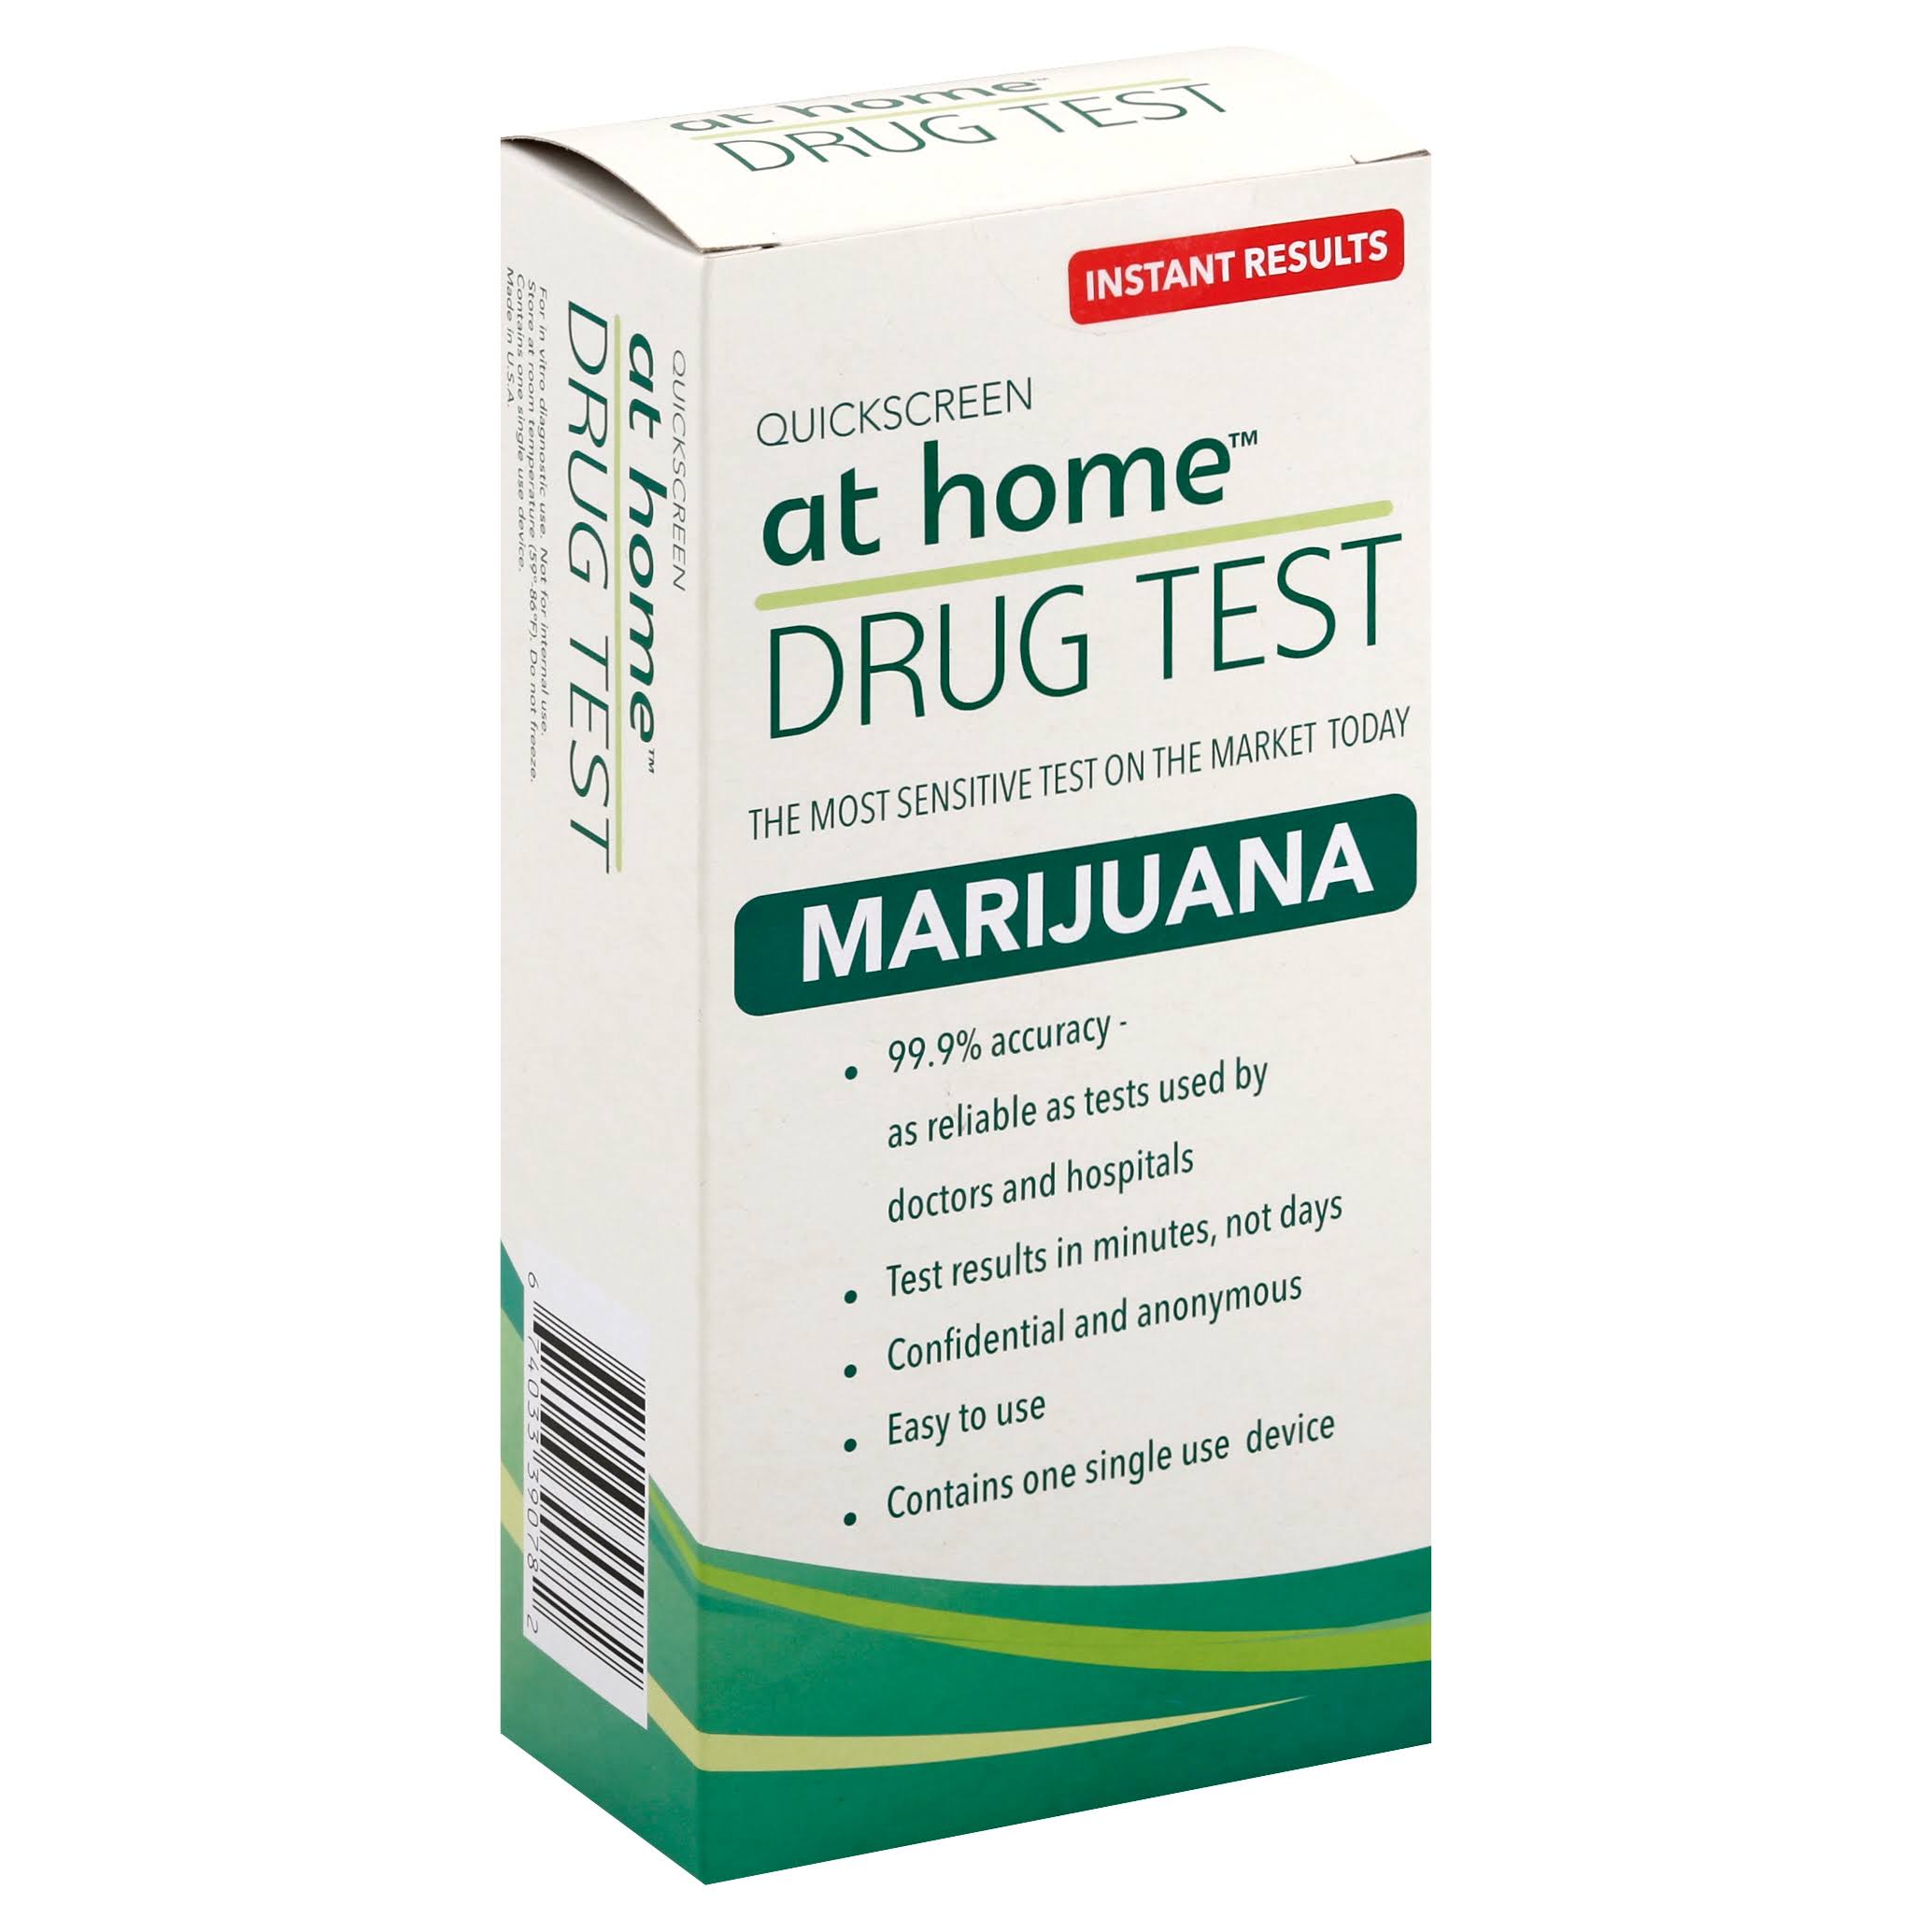 At Home Quickscreen Drug Test, Marijuana, Instant Results